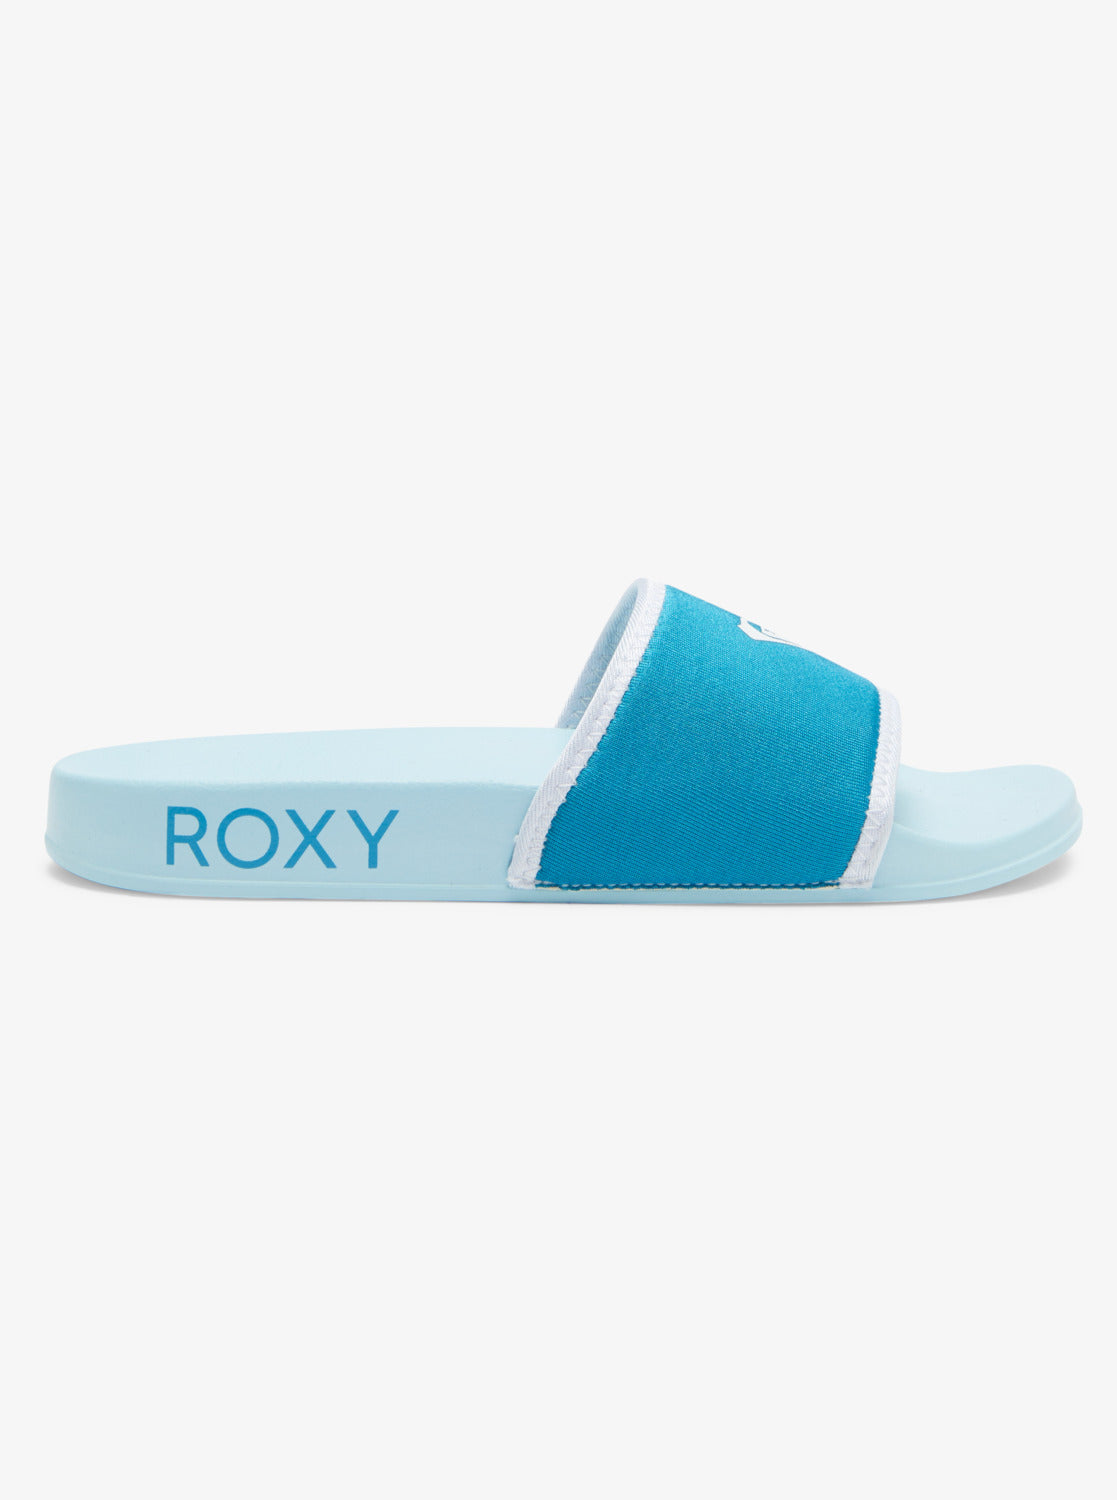 Roxy Women's Porto Raffia Flip Flops at